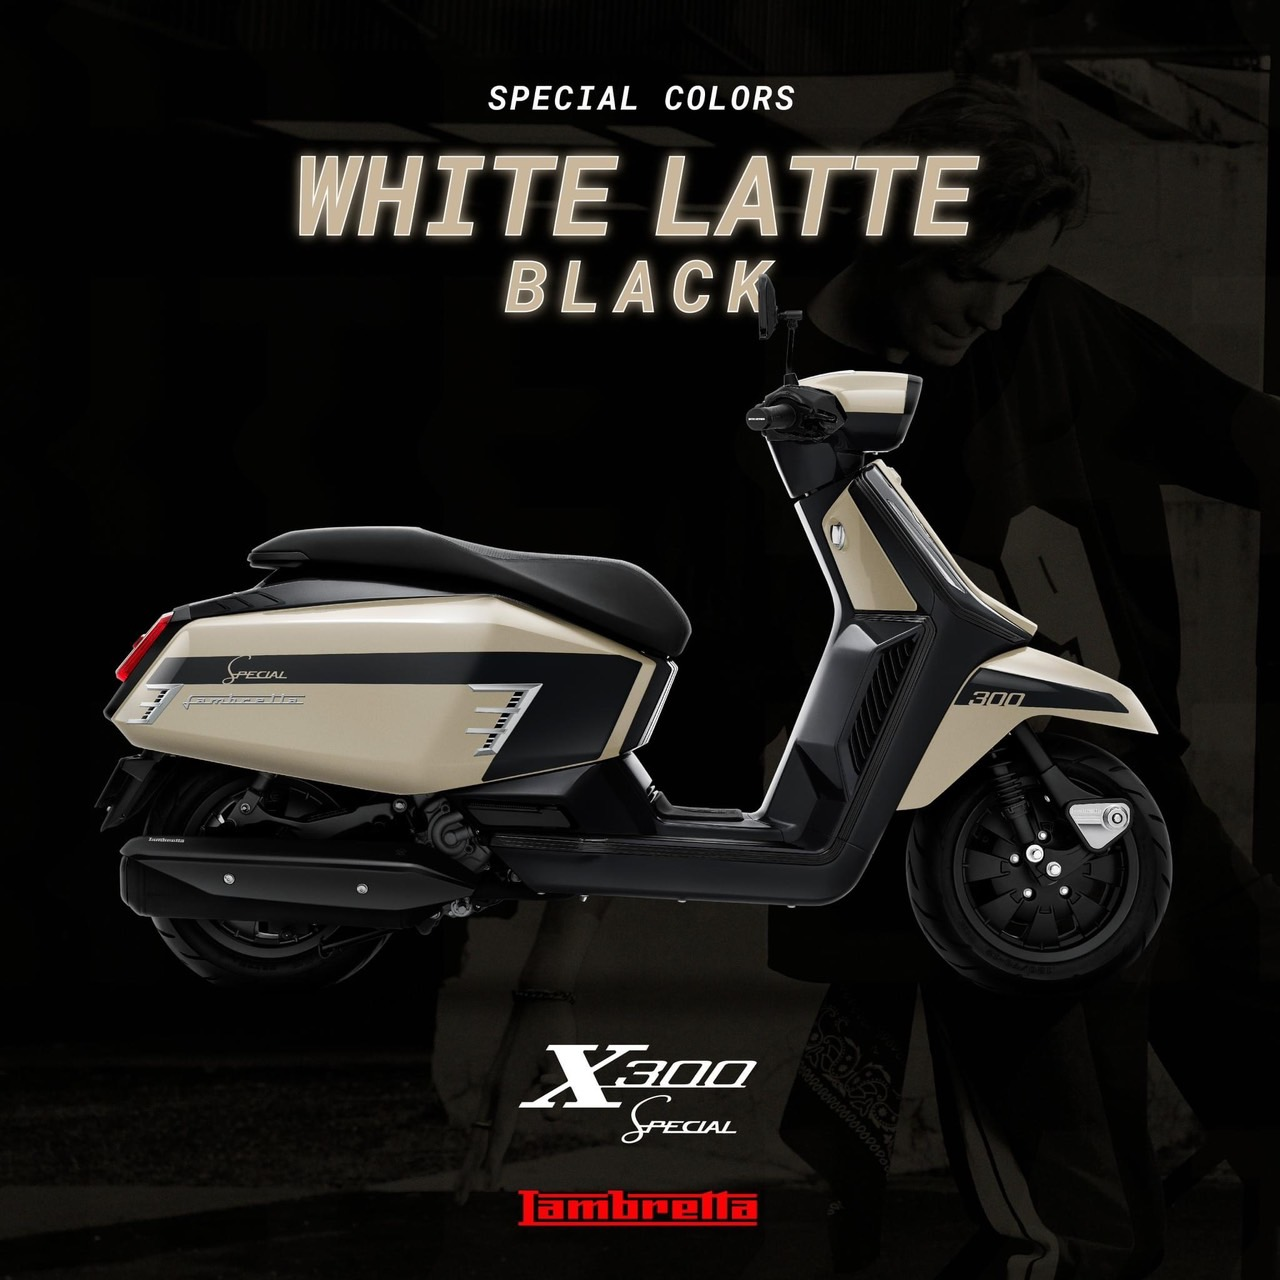 New Lambretta x300 Special White Latte/Black สีลาเต้ตัดกับสีดำ , ขอบคิ้วสีดำ